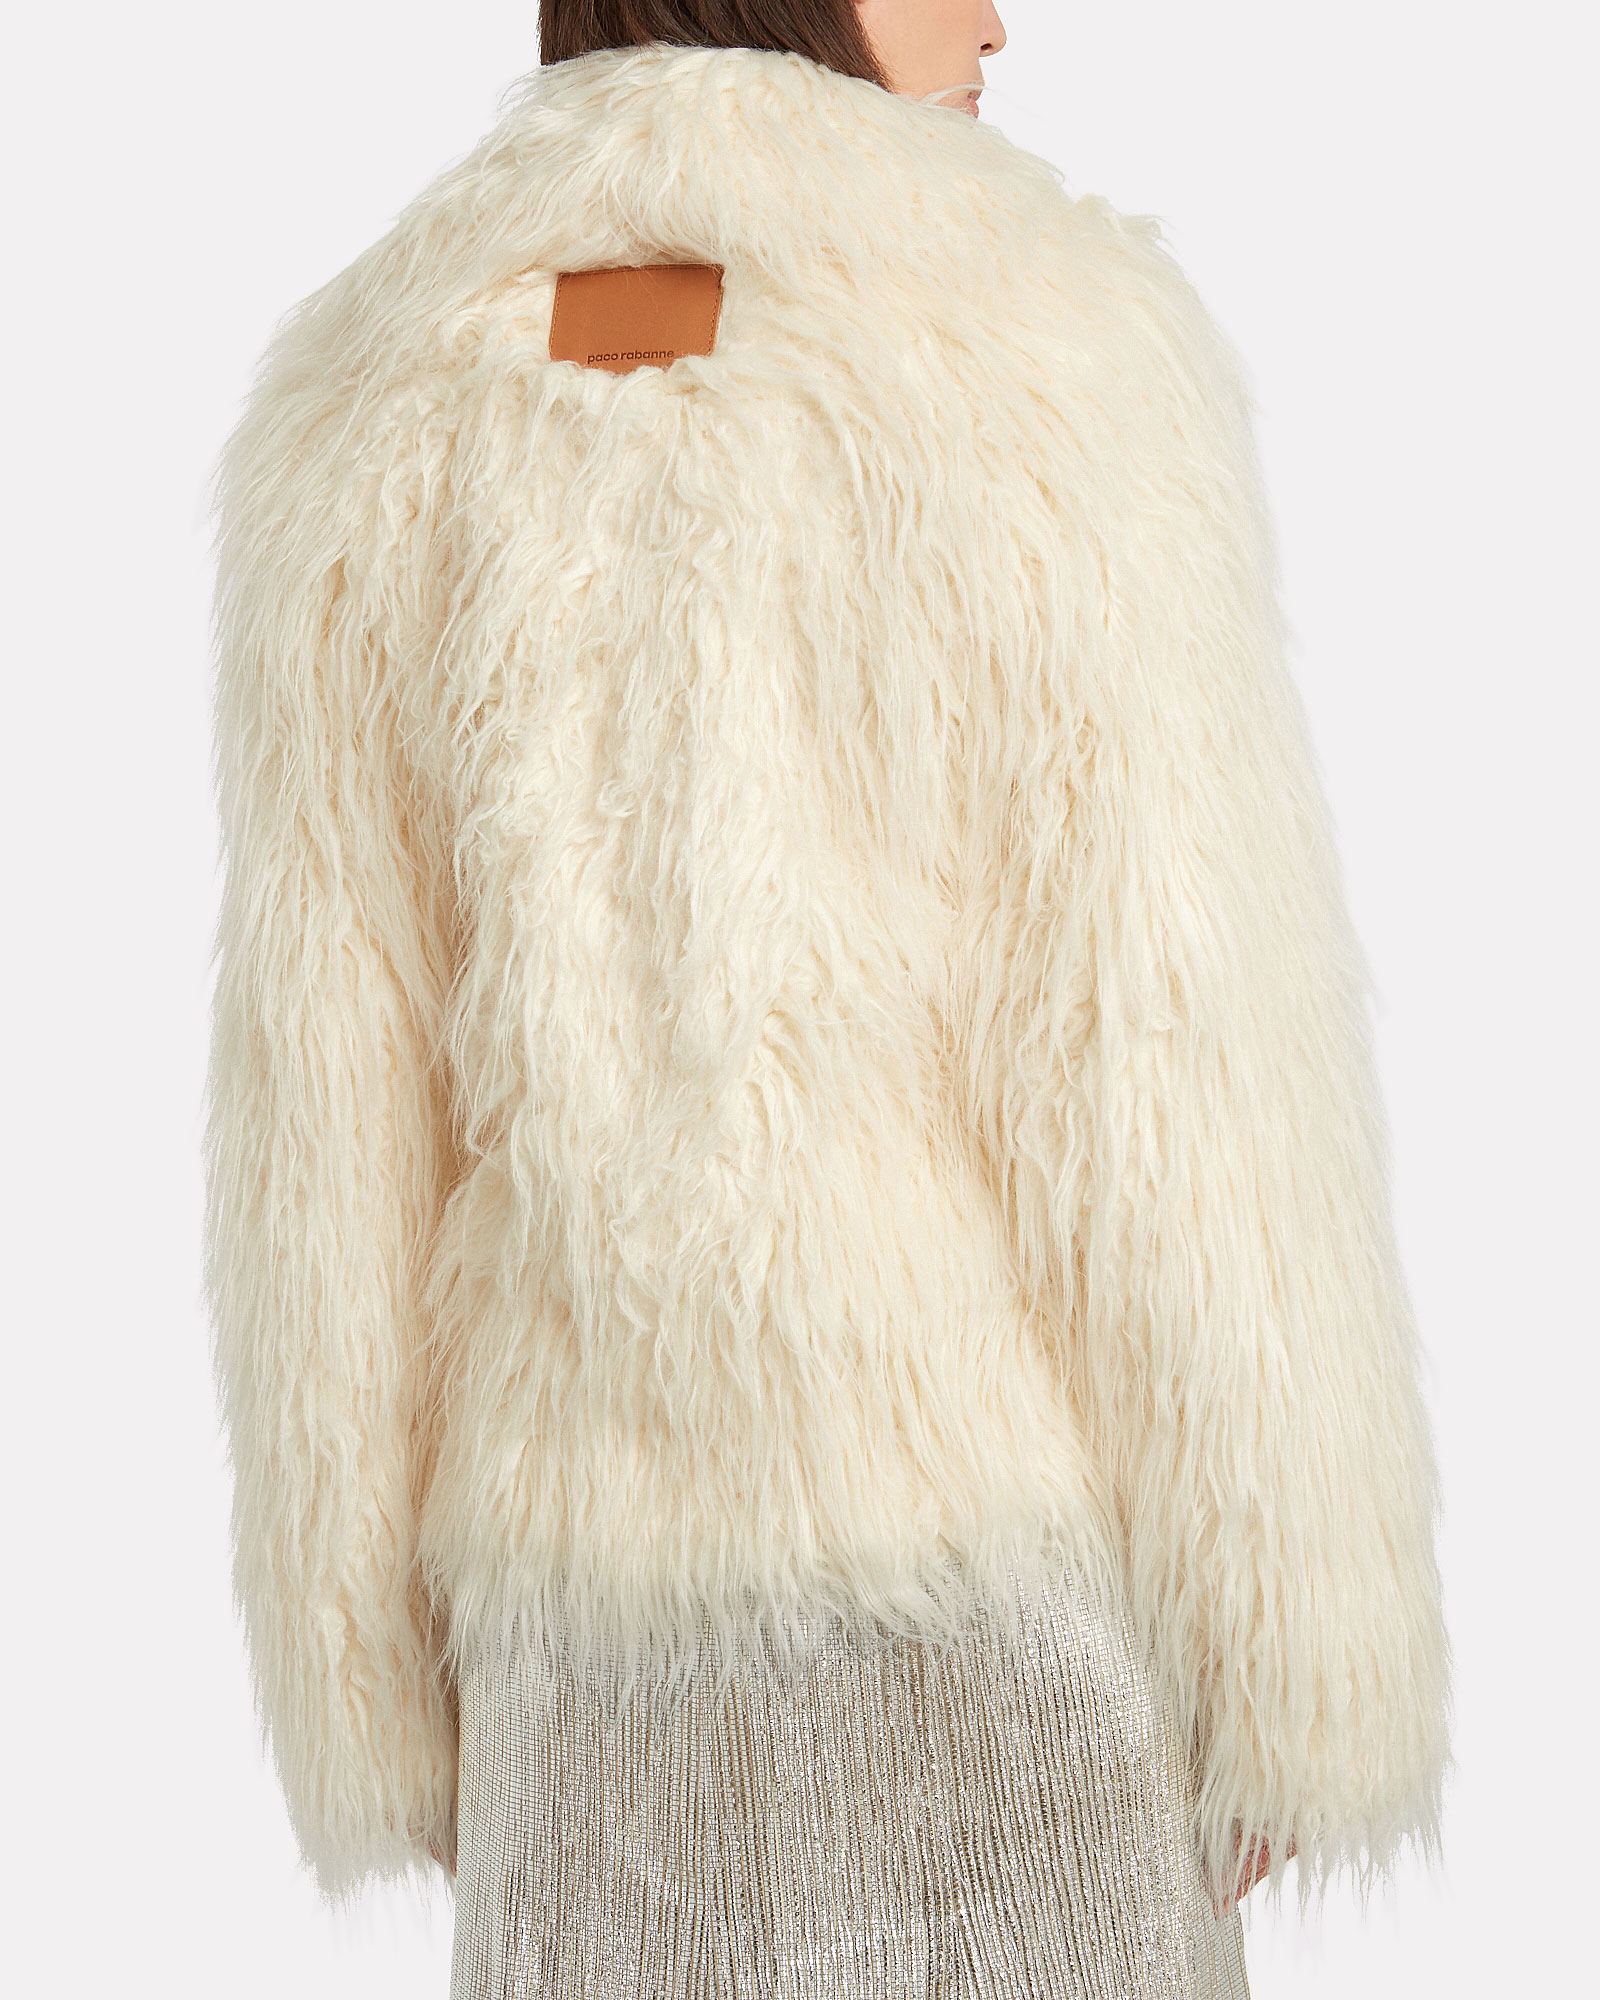 Paco Rabanne | Oversized Faux Fur Jacket | INTERMIX®